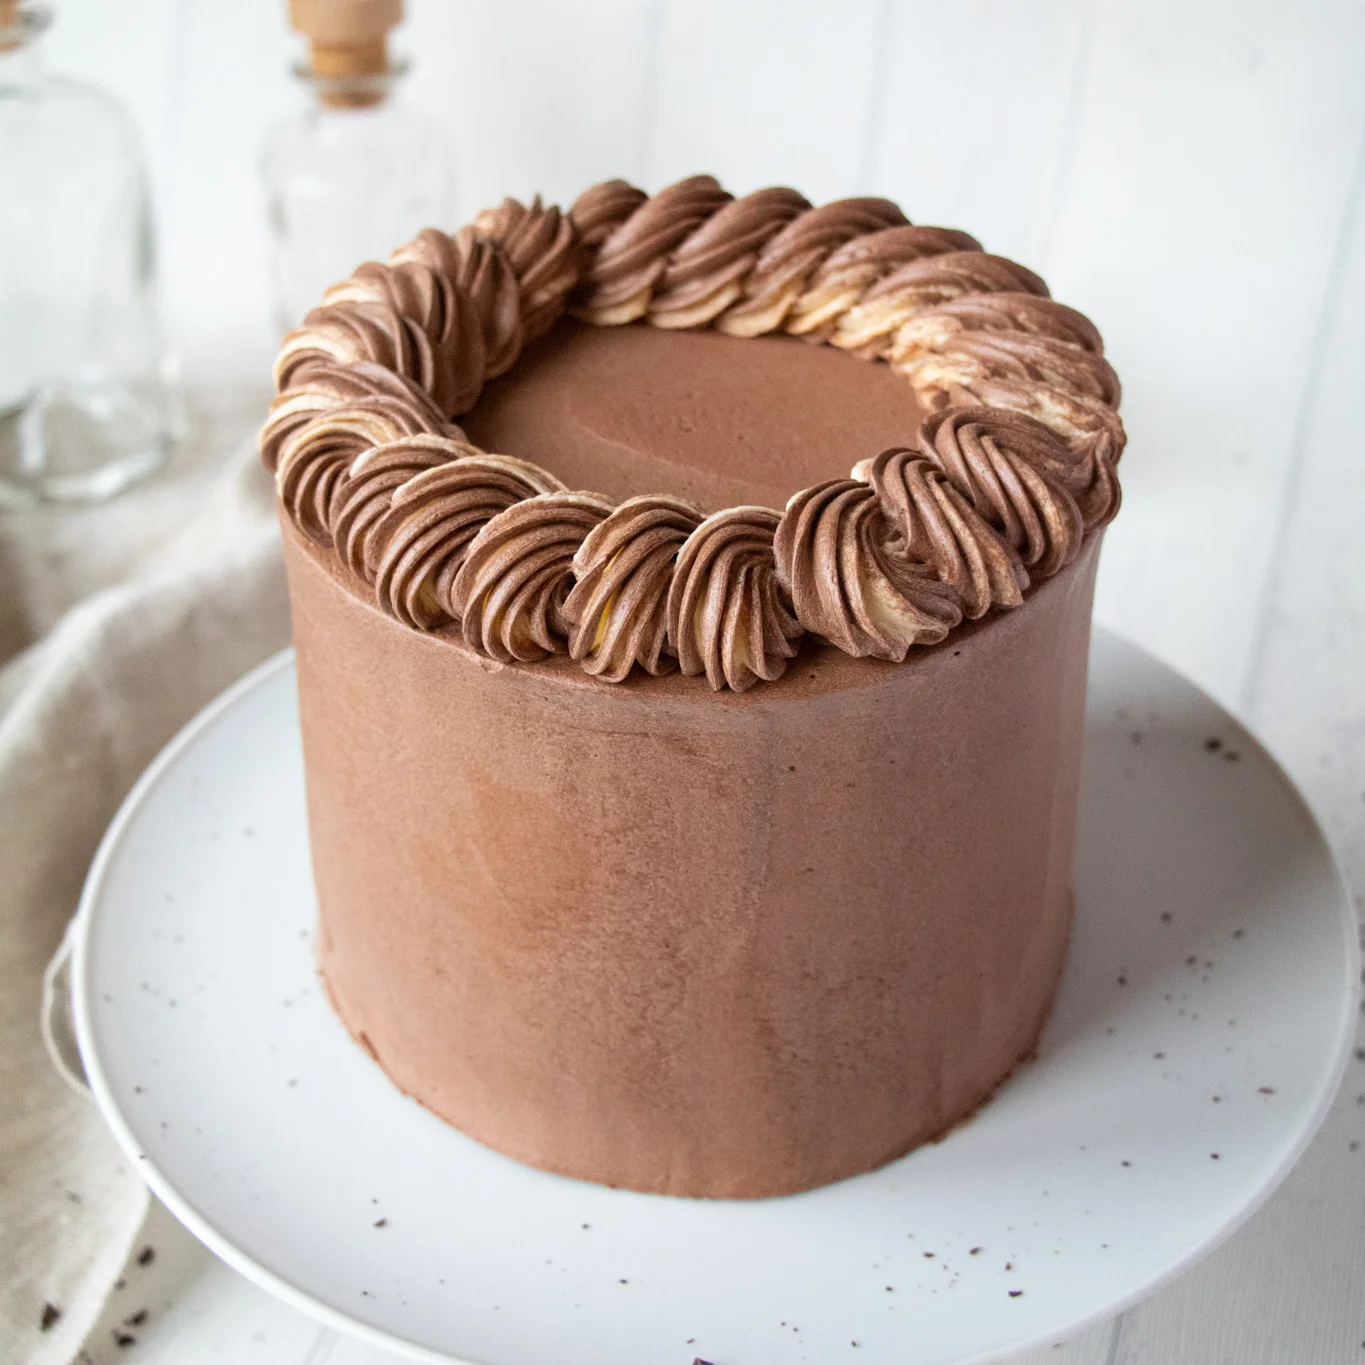 Moist-chocolate-cake-homemade-coucoucake3